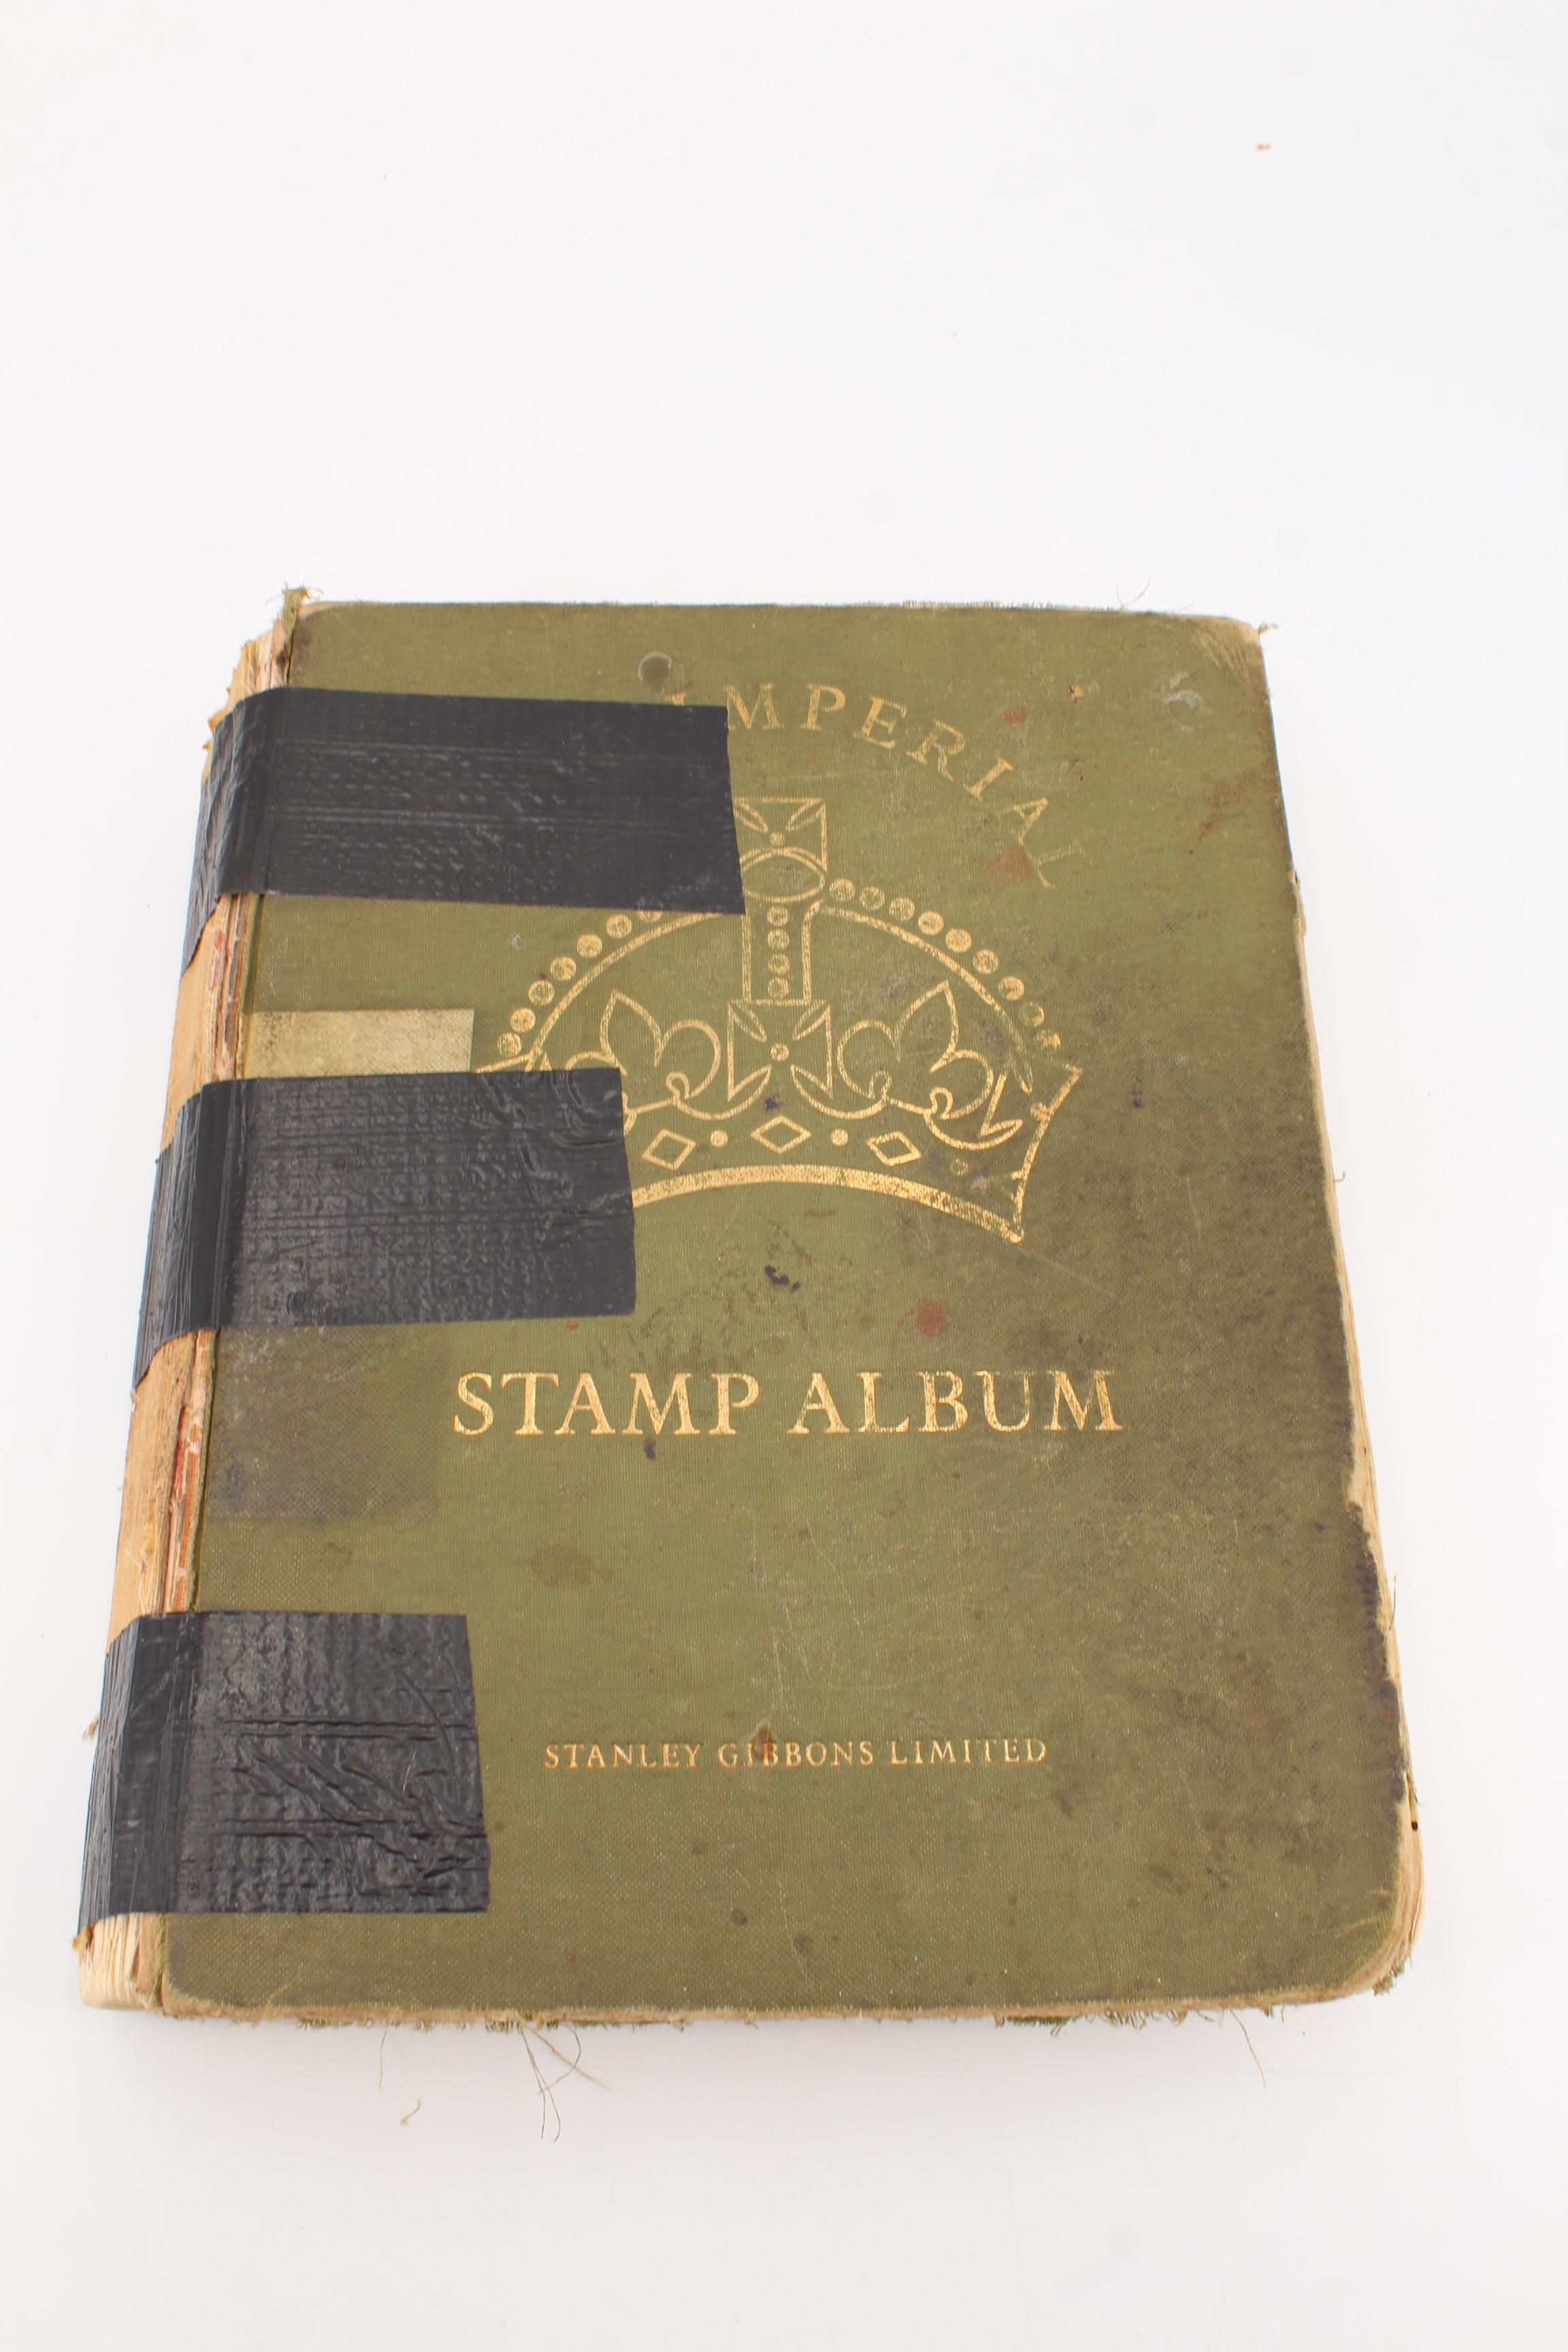 A New Imperial stamp album, Volume 1 GB and Antigua to Malta